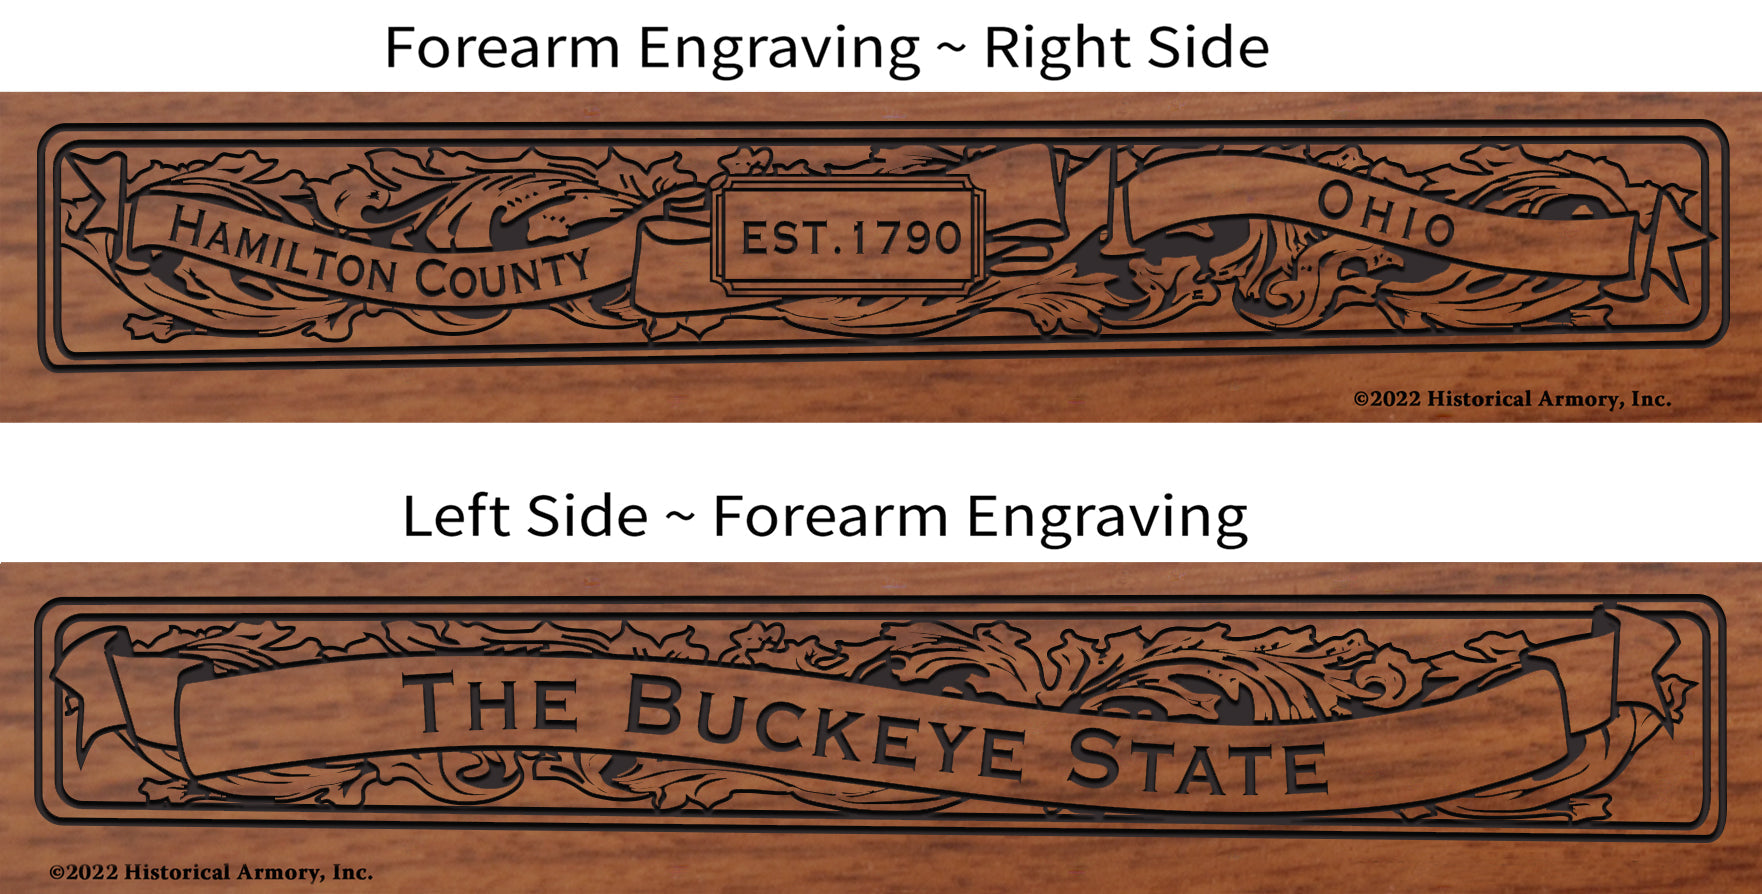 Hamilton County Ohio Engraved Rifle Forearm Right-Side